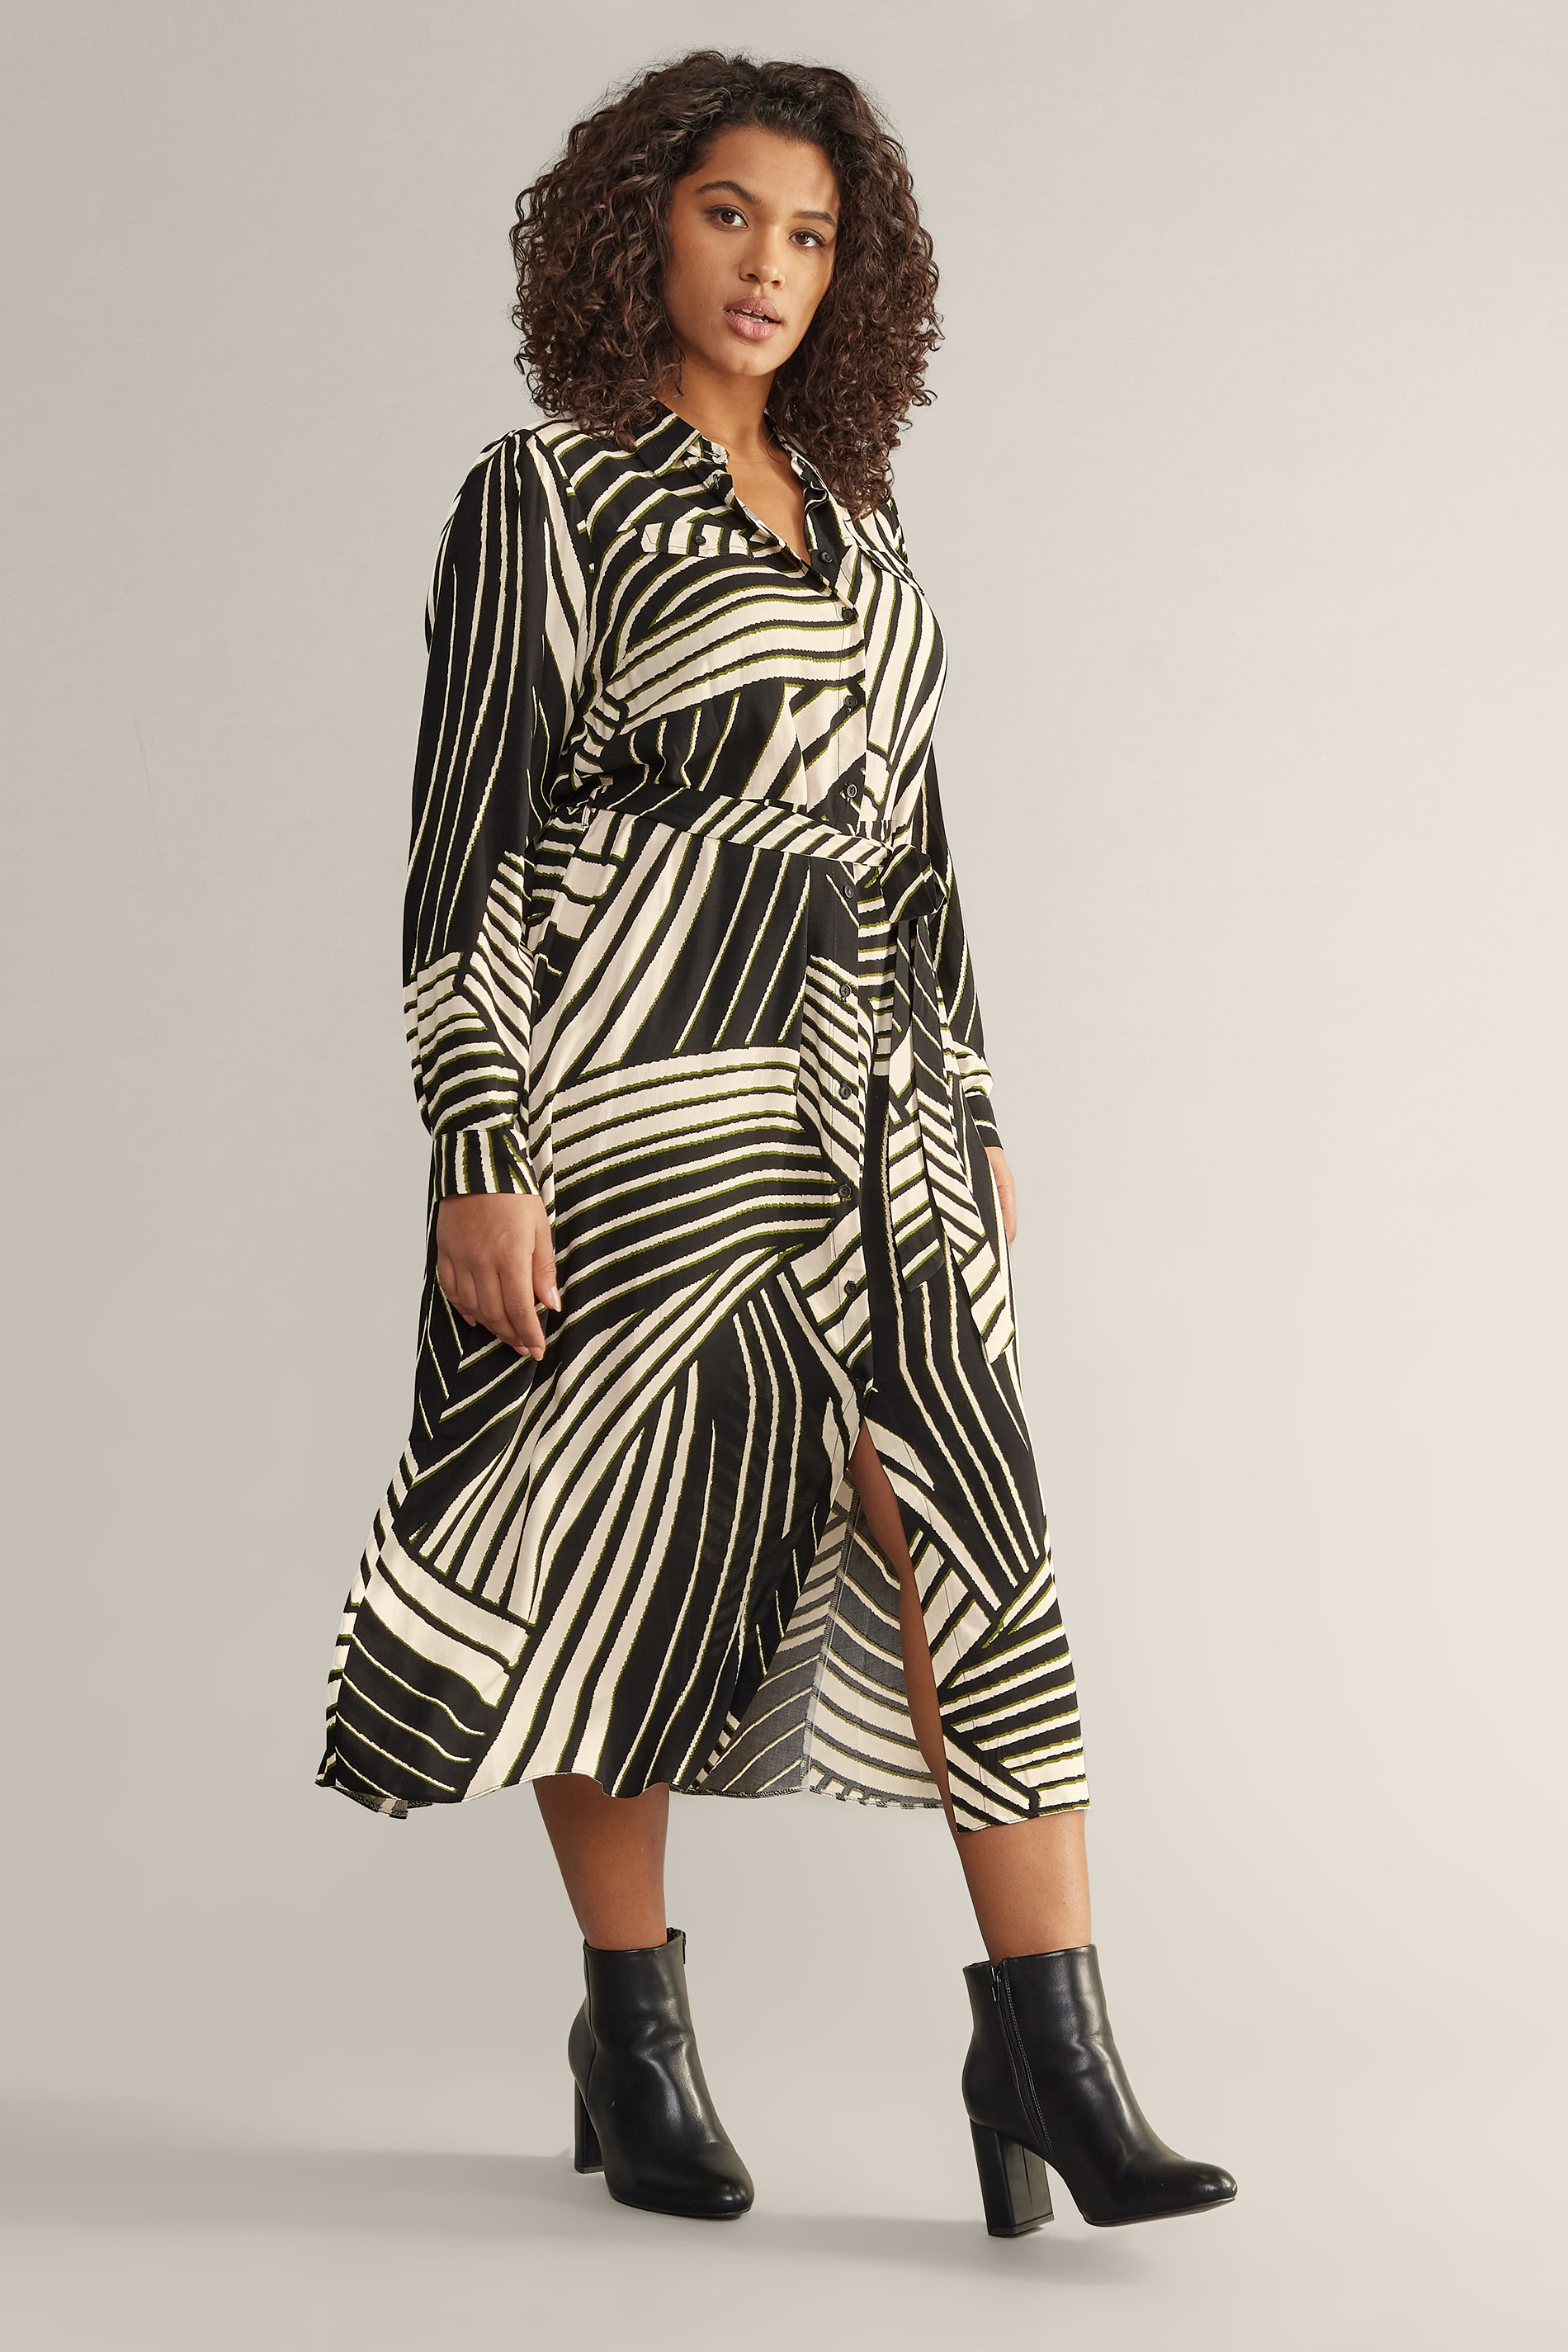 EVANS Plus Size Black & Ivory White Linear Print Utility Shirt Dress | Evans 2